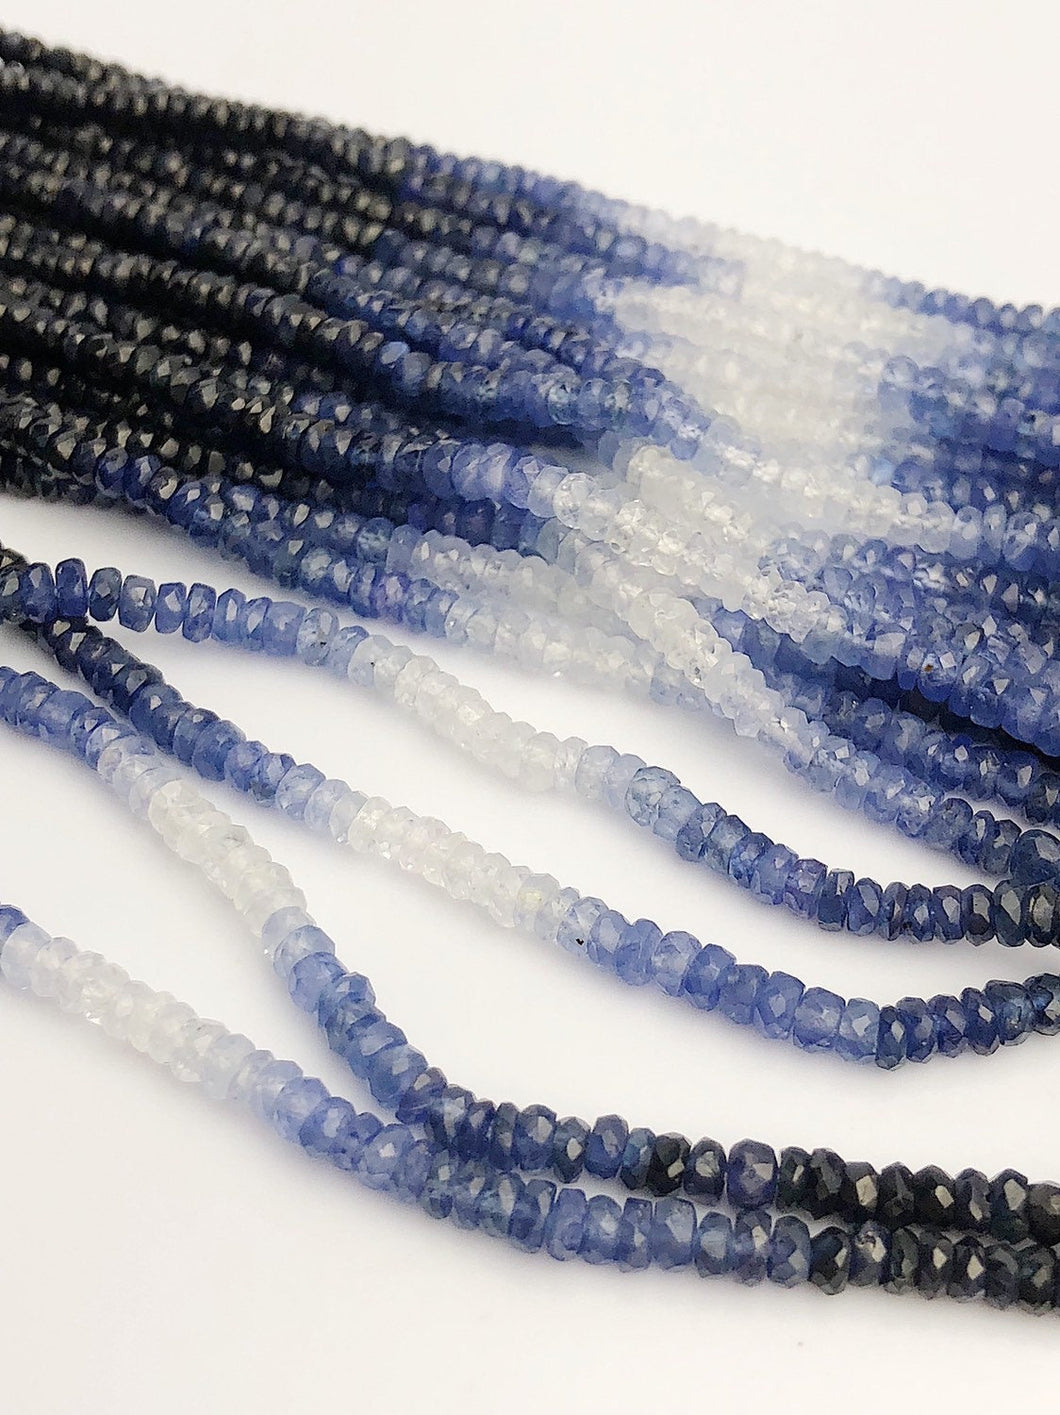 HALF OFF SALE - Shaded Sapphire Gemstone Beads, Full Strand, Semi Precious Gemstone, 16